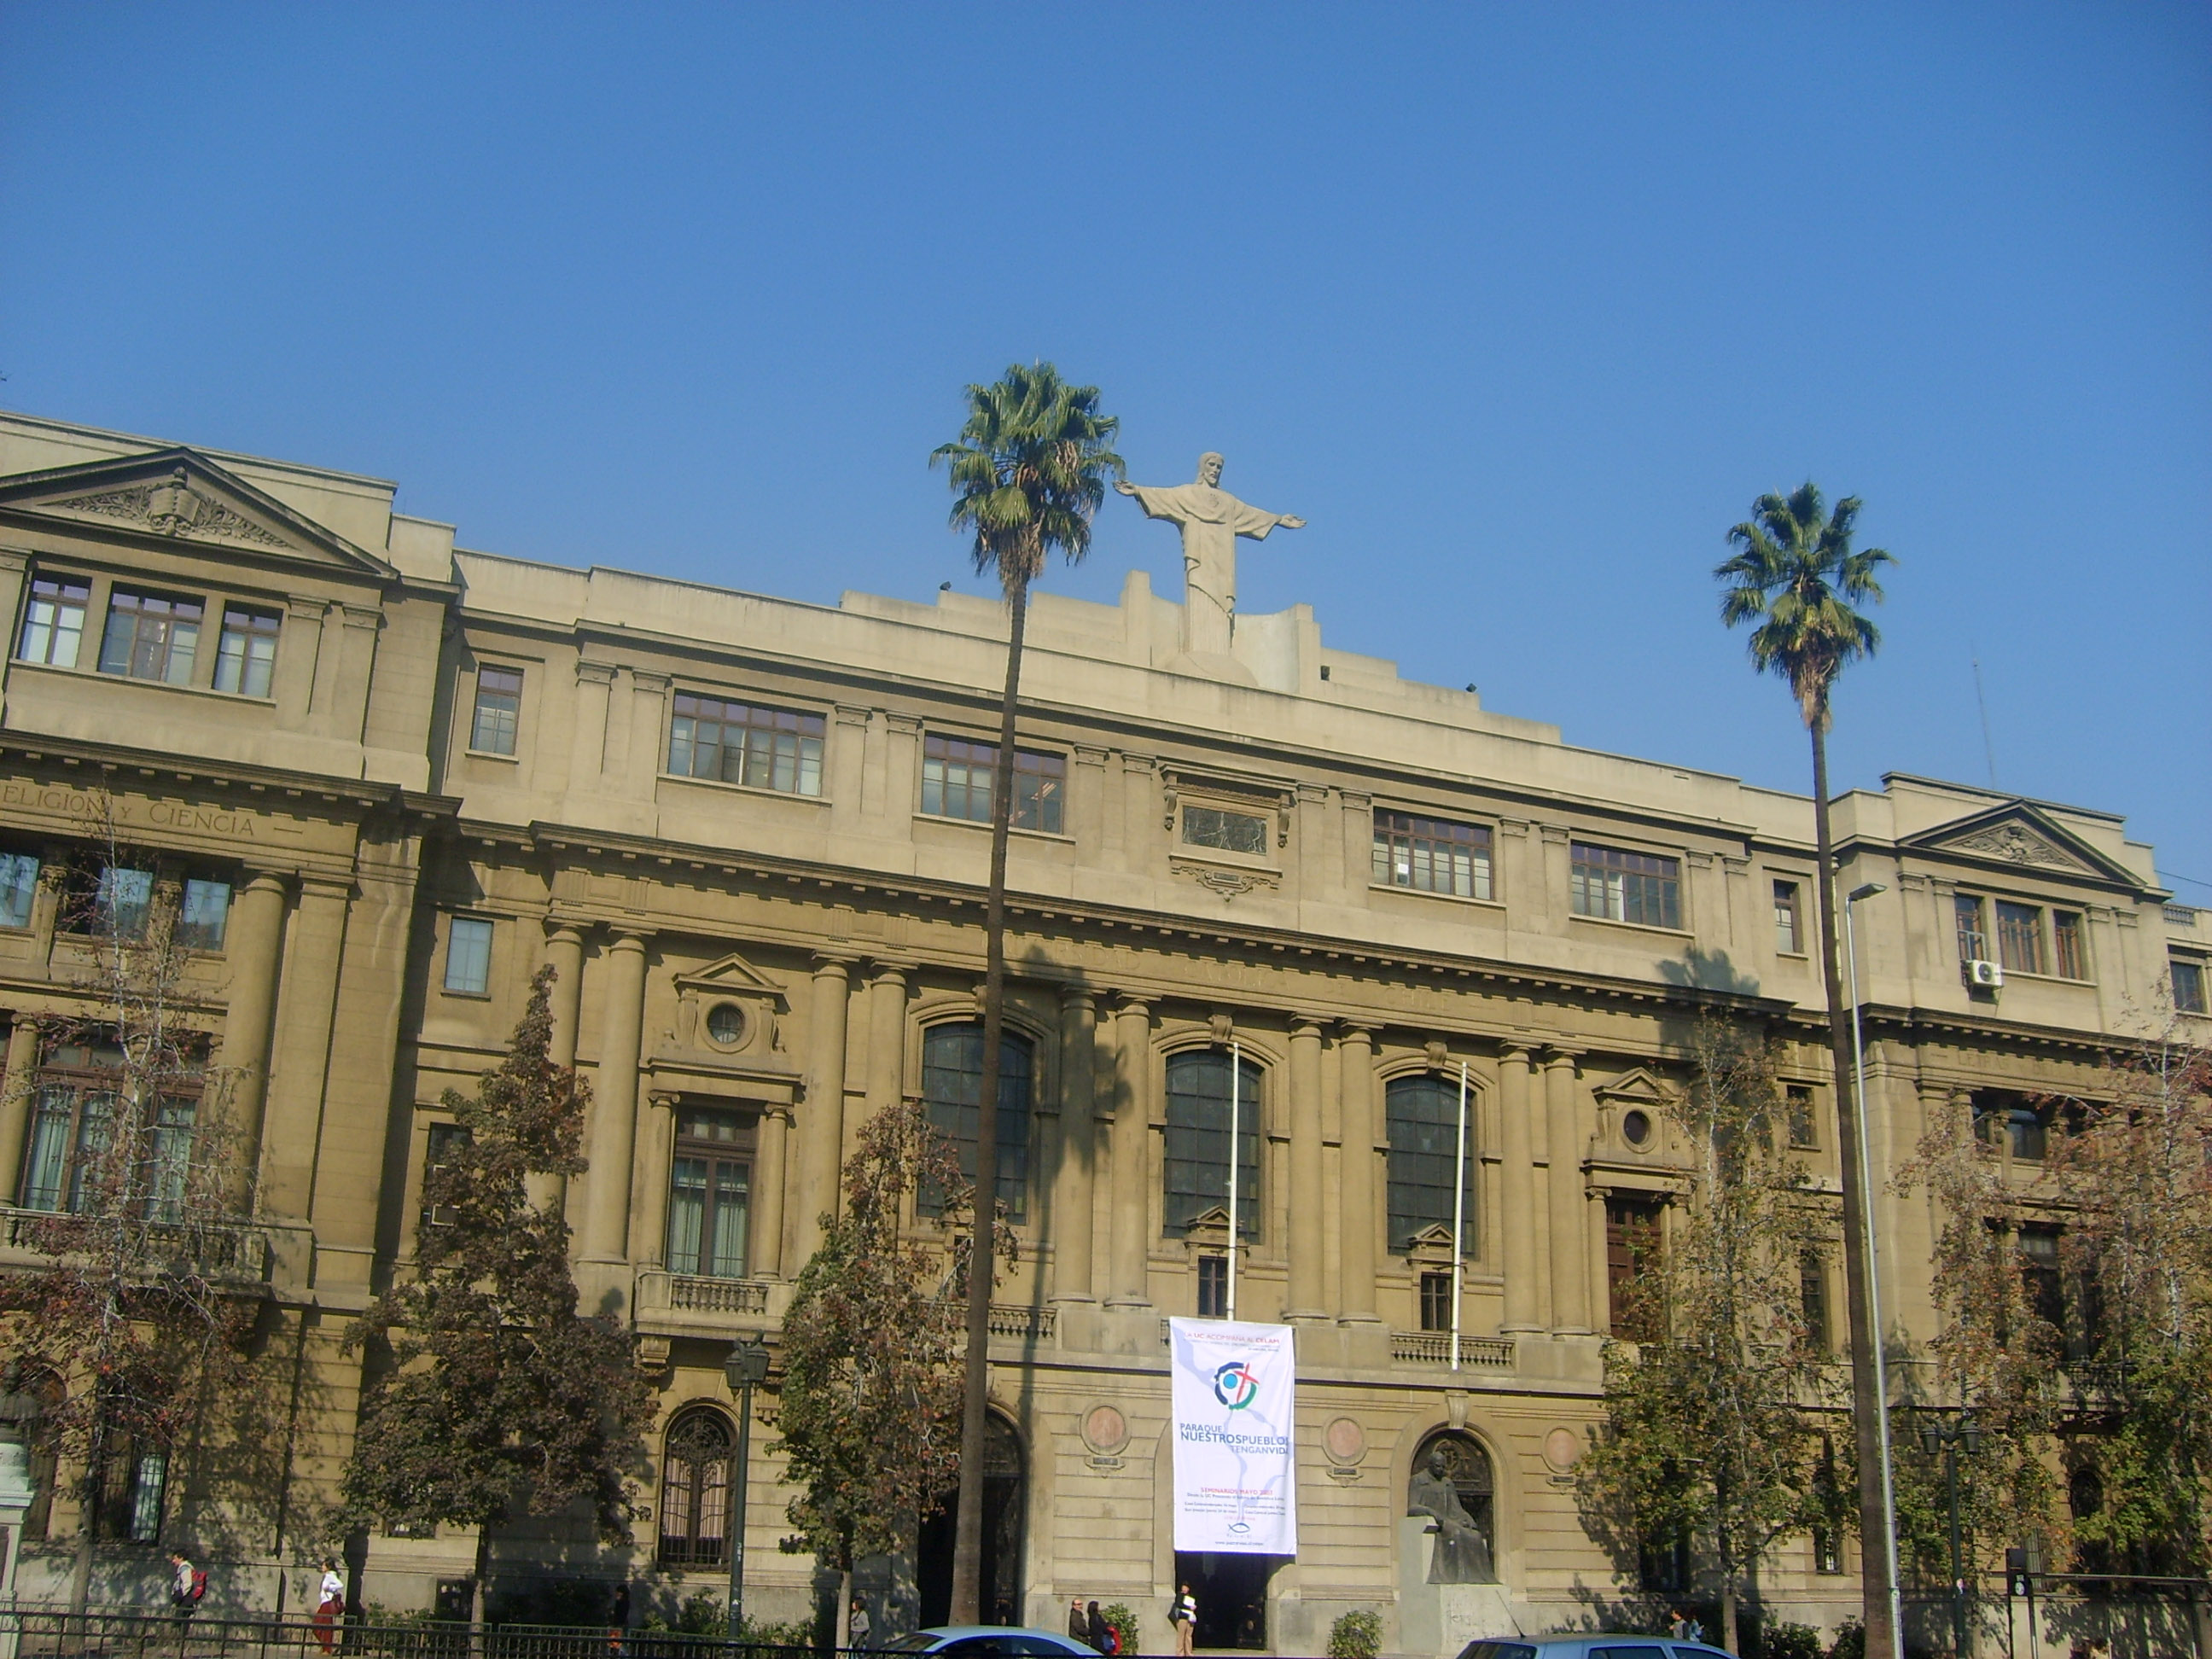 Pontificia Universidad Católica de Chile in Santiago image - Free stock ...